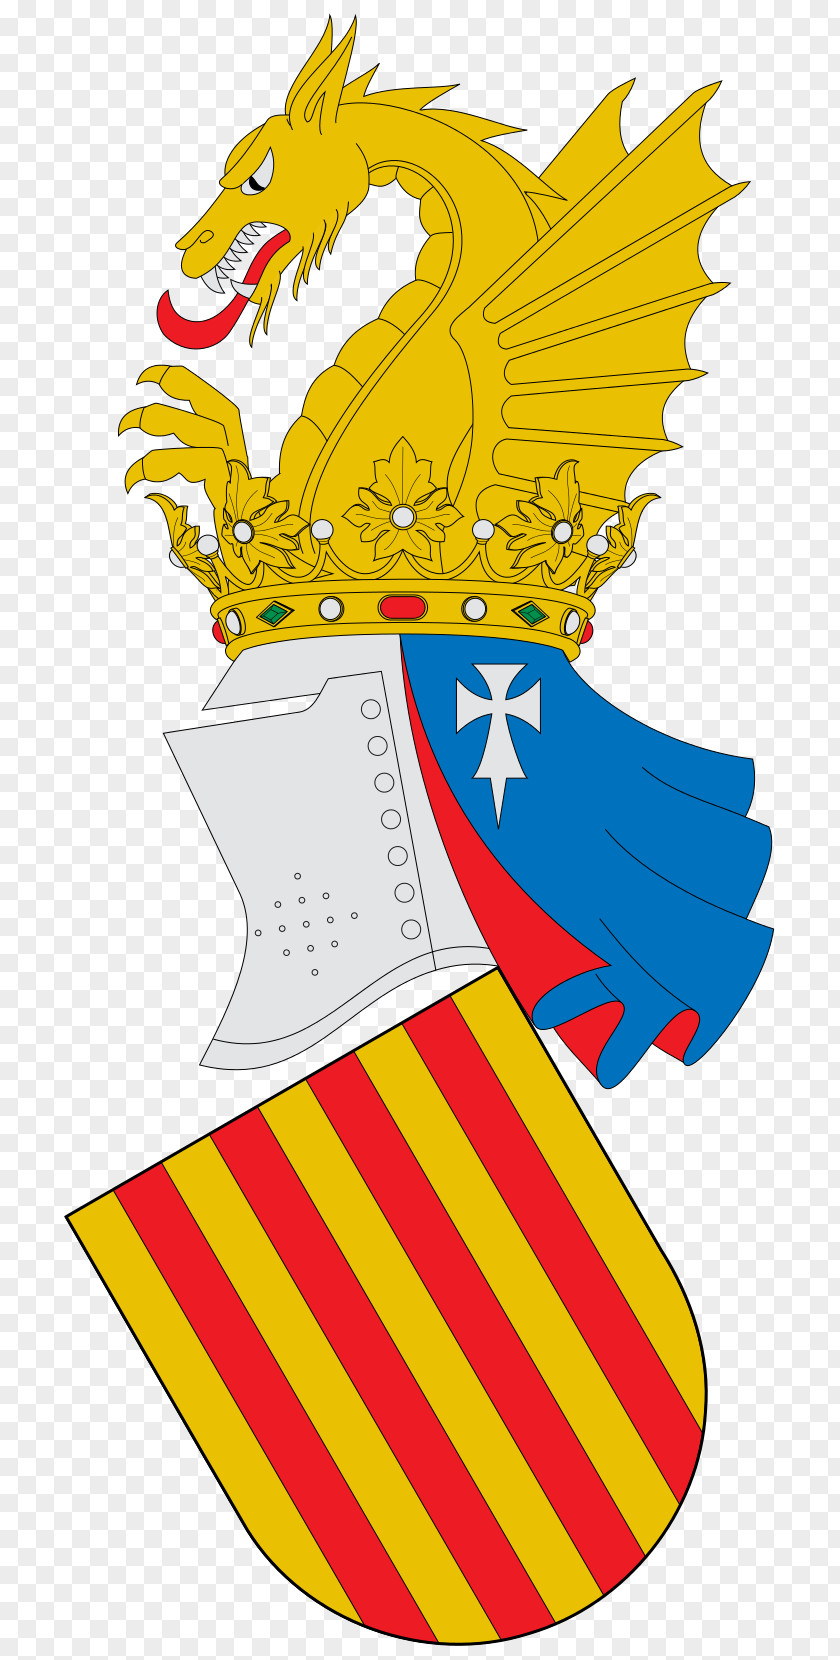 Lined Kingdom Of Valencia Escudo Da Comunidade Valenciana Escutcheon Blason De Valence PNG